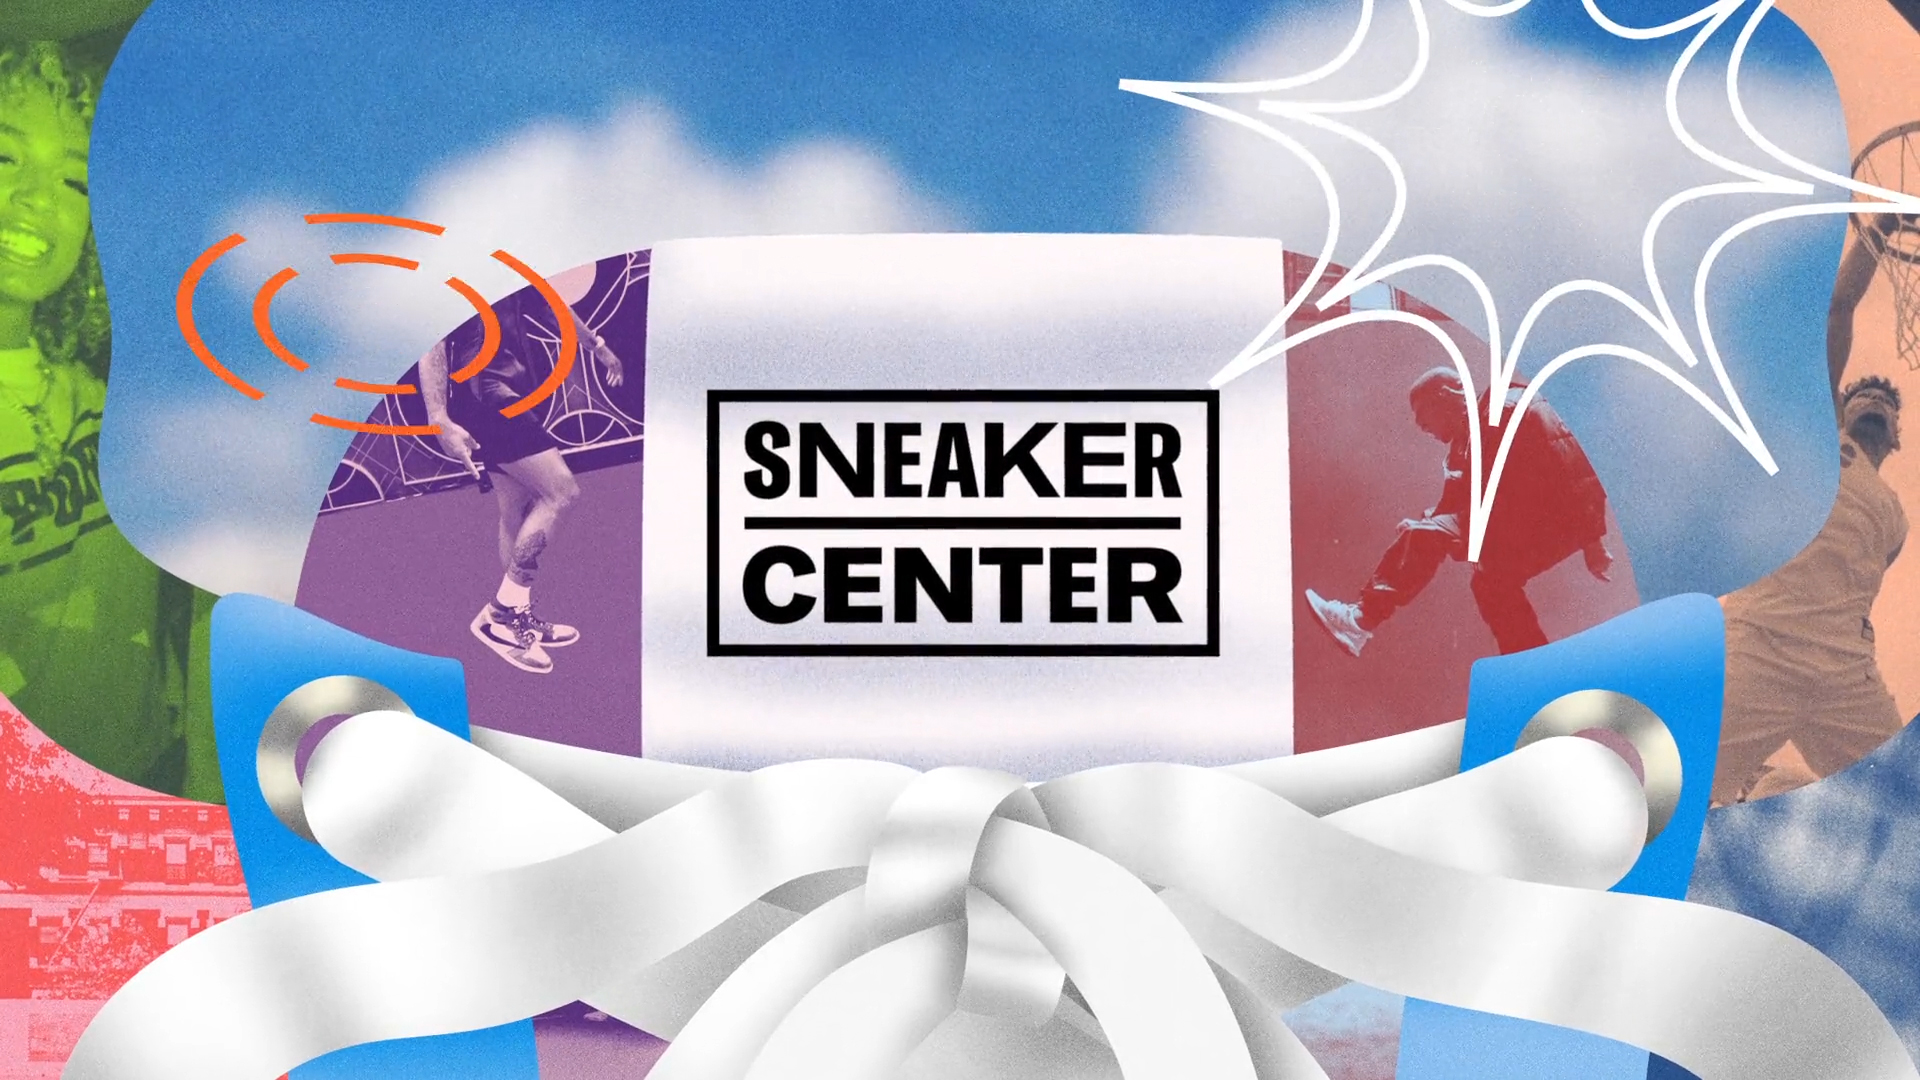 espn___sneakercenter_show_package_montage-1080p-0003845